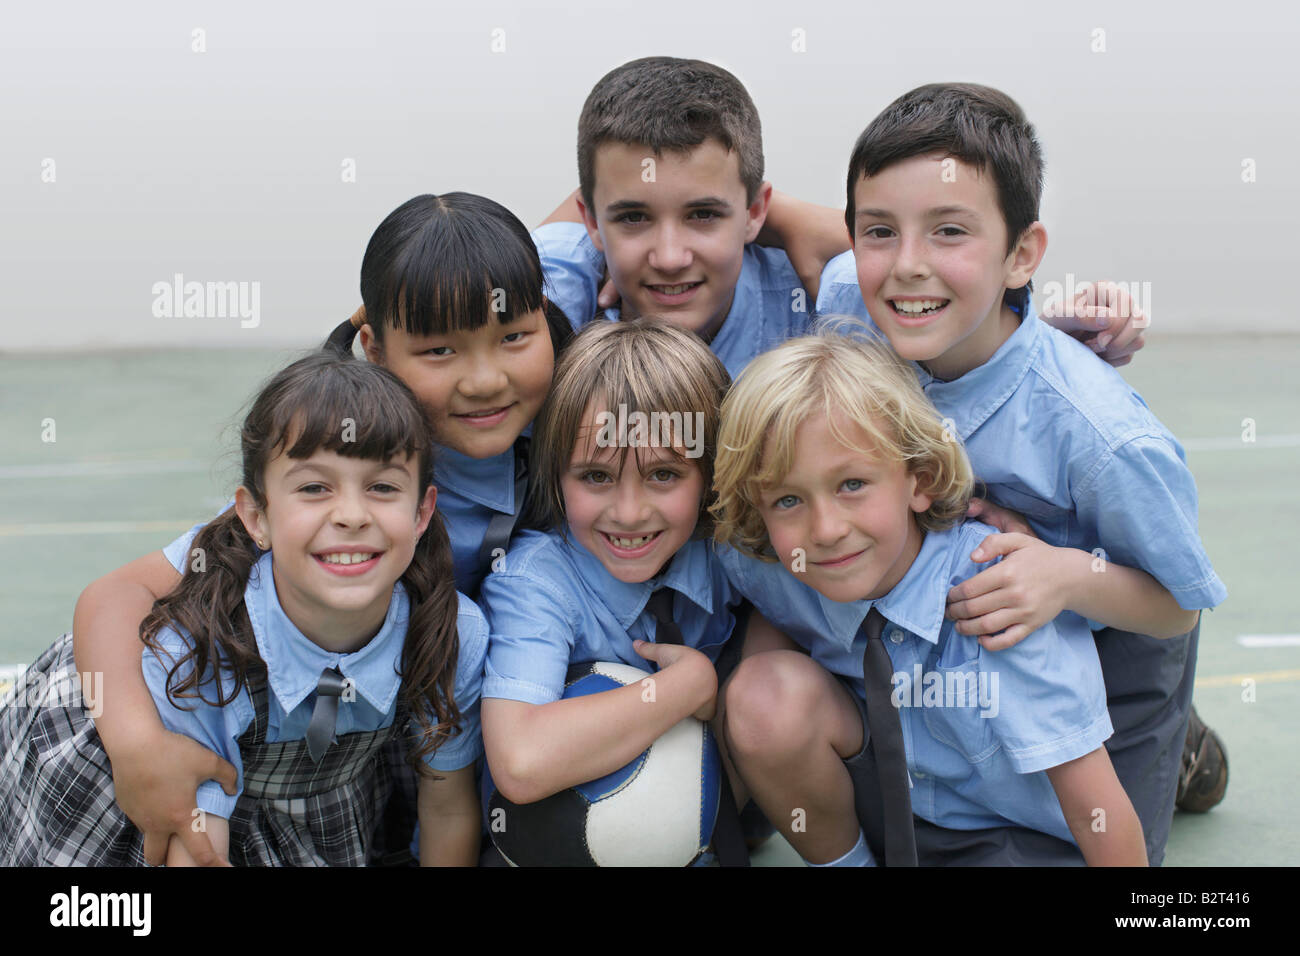 School children in group photo Stock Photo